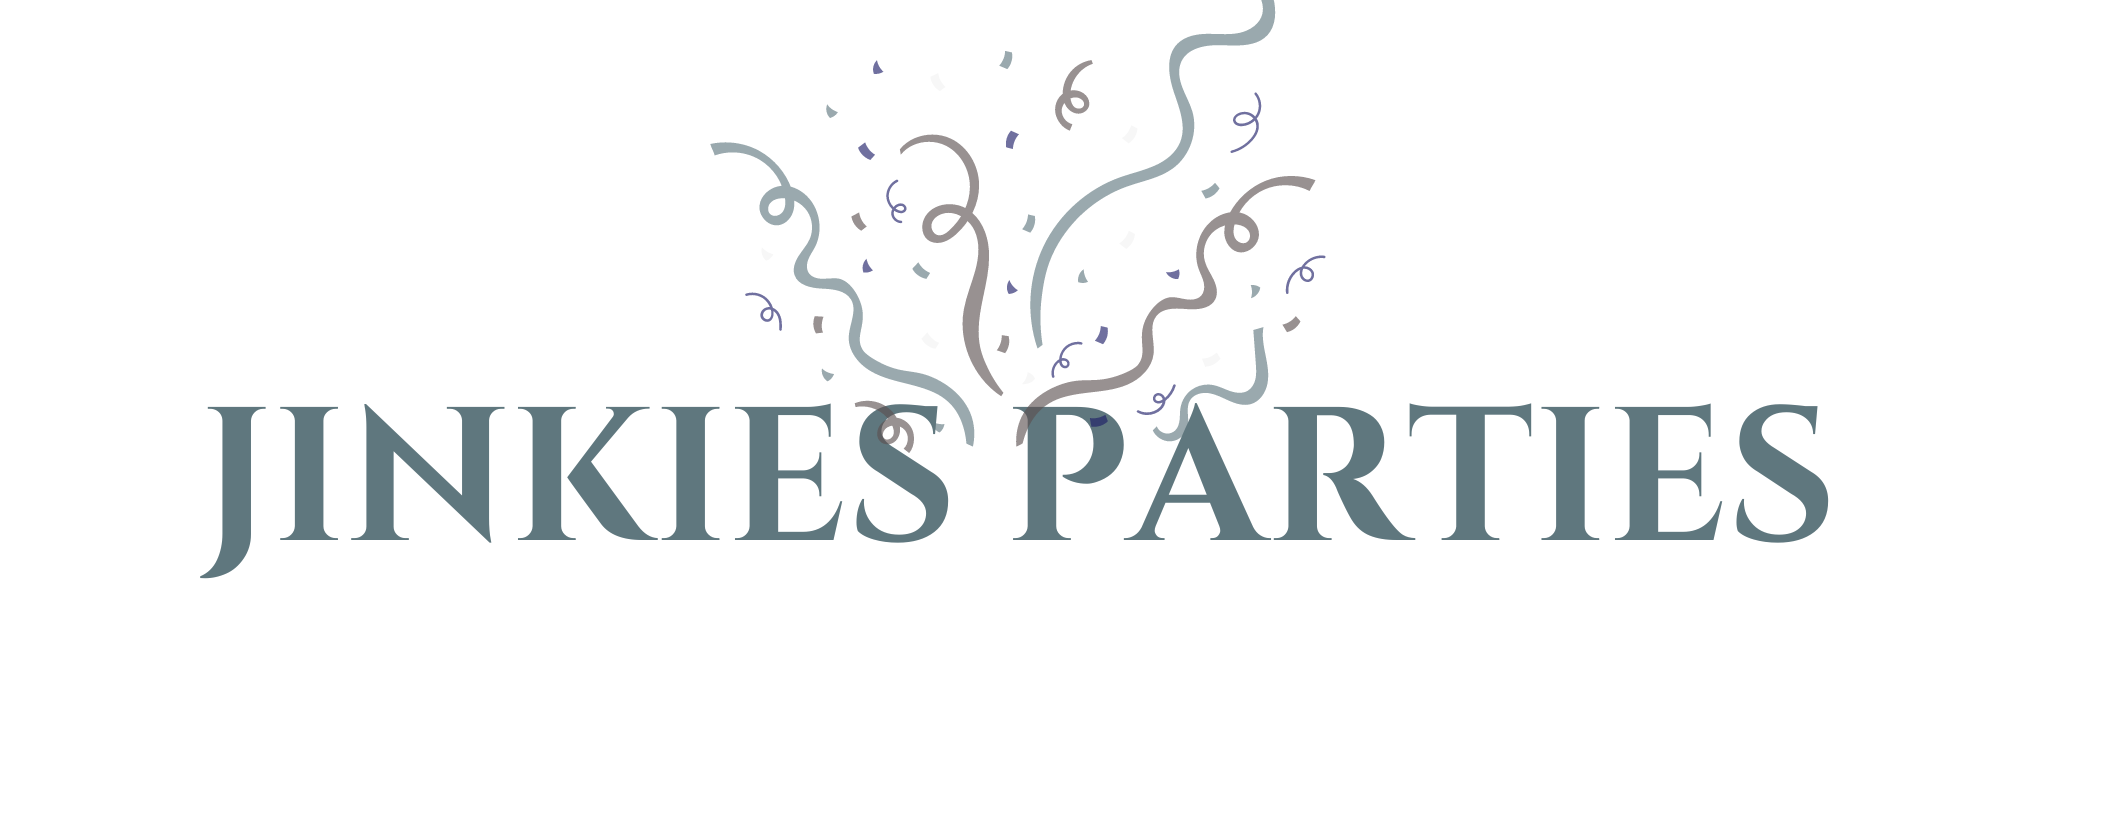 Jinkies Parties